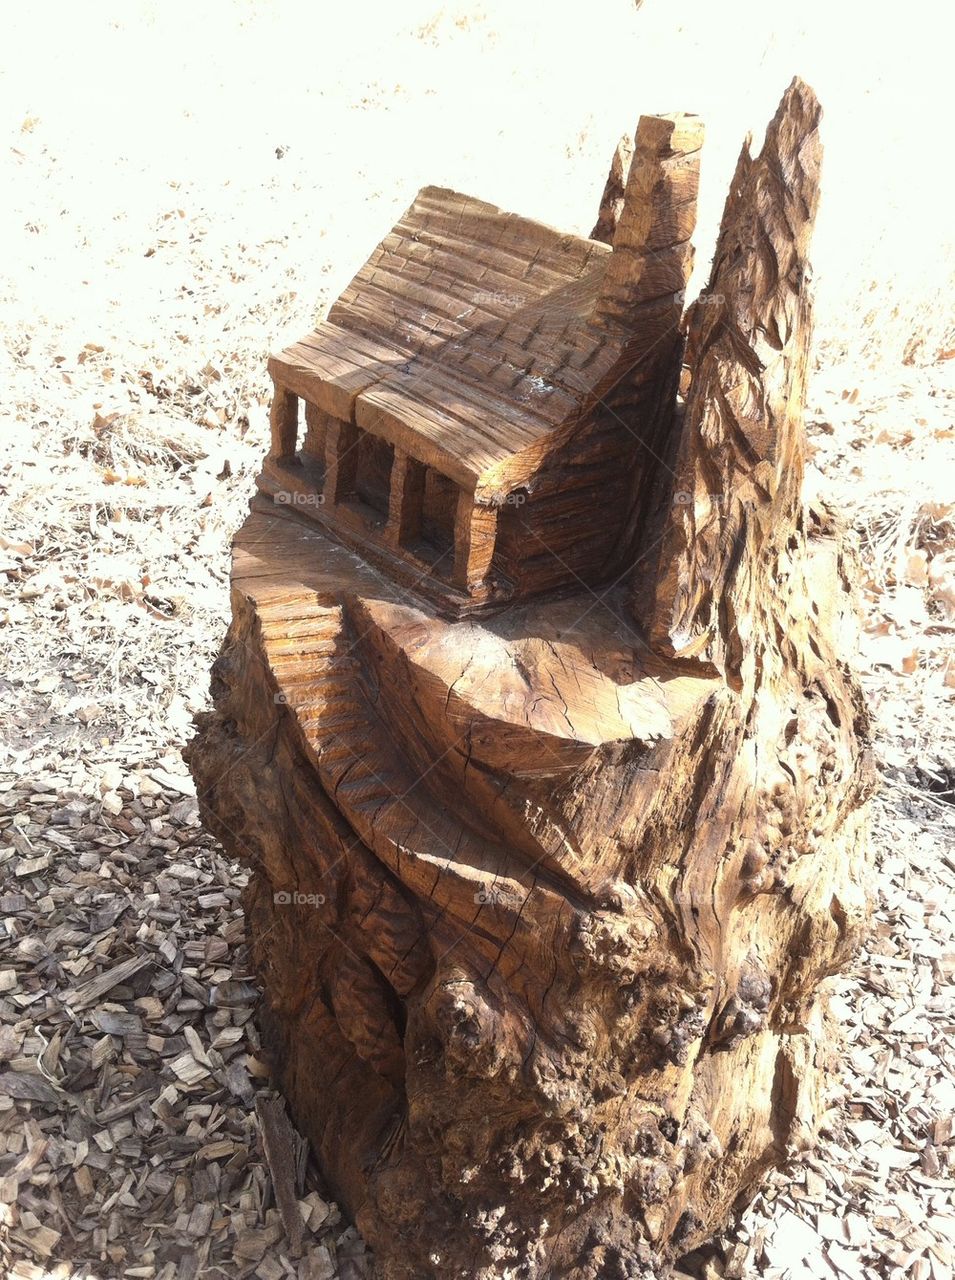 House stump